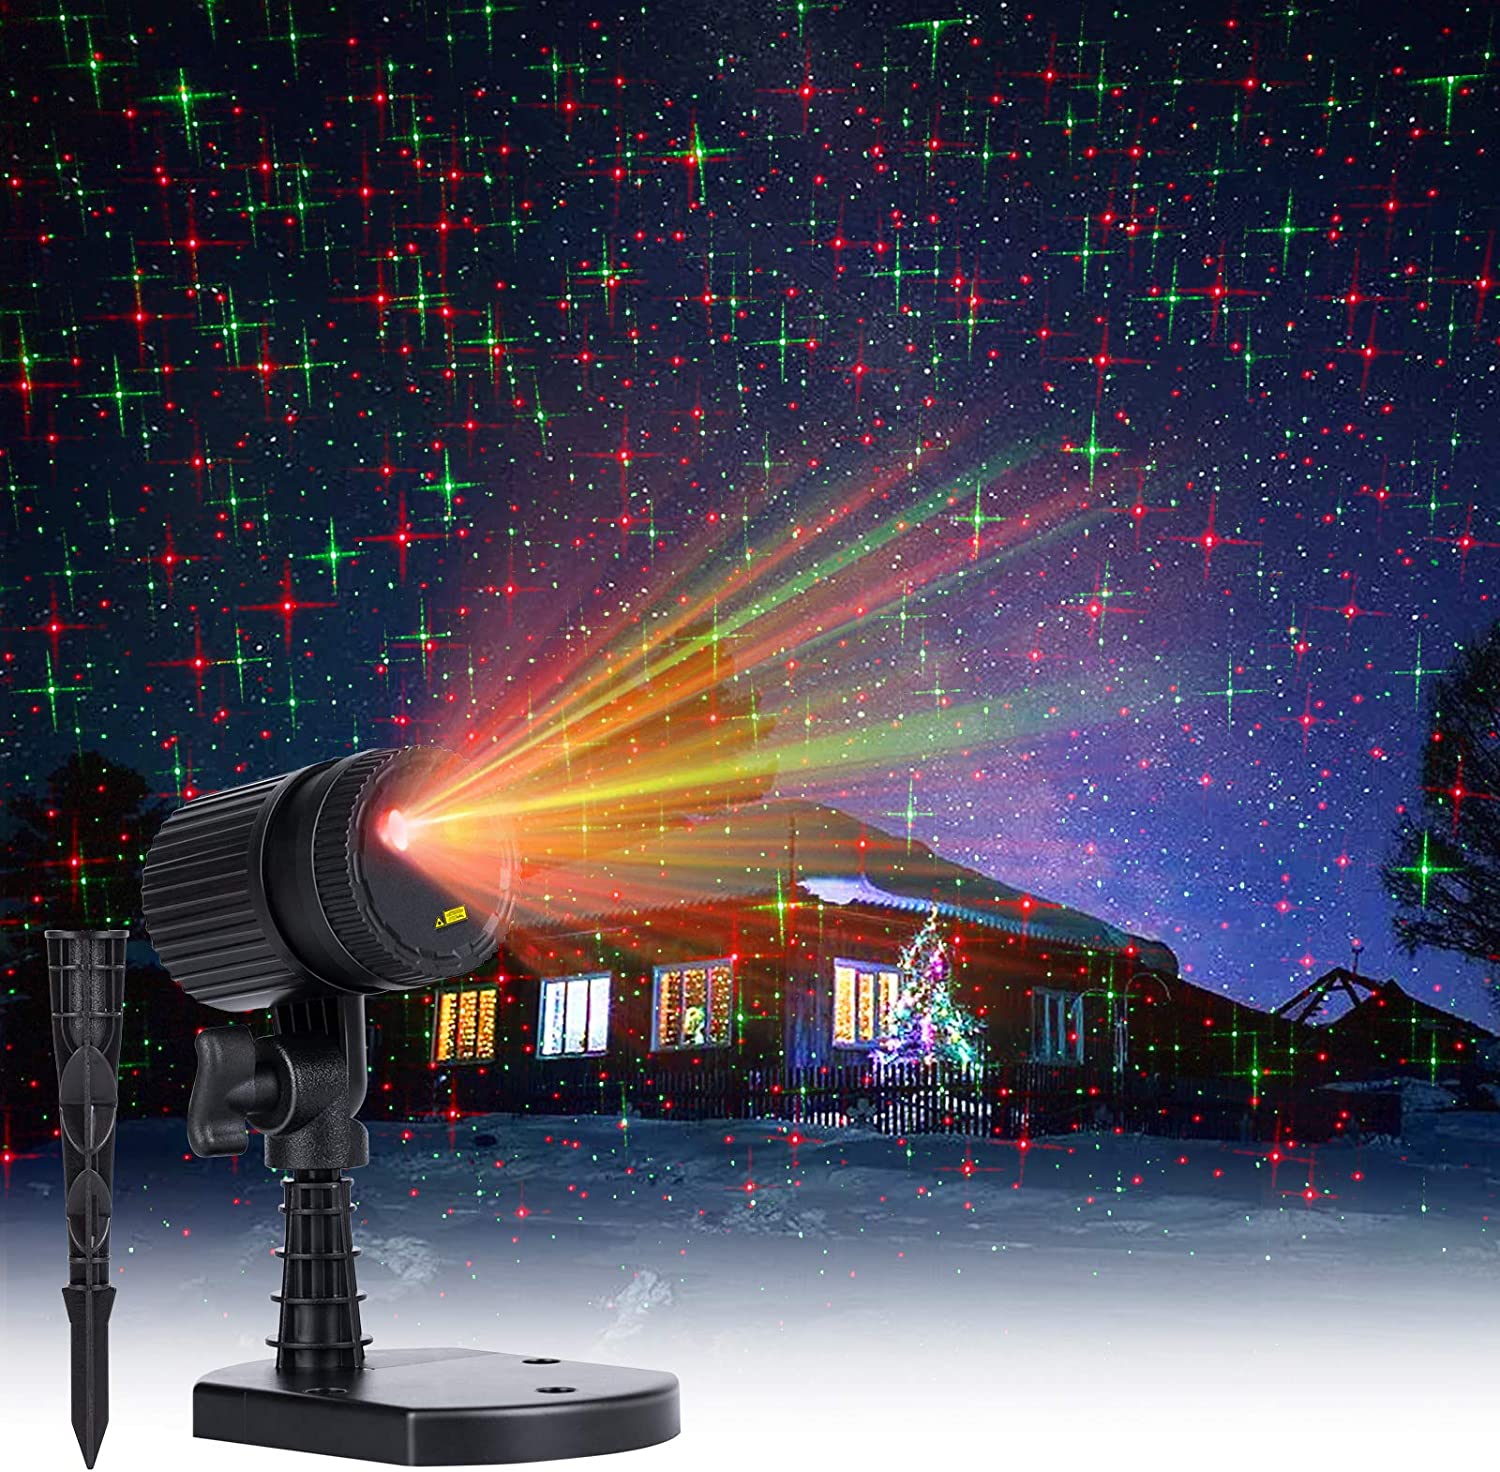 best christmas projector lights